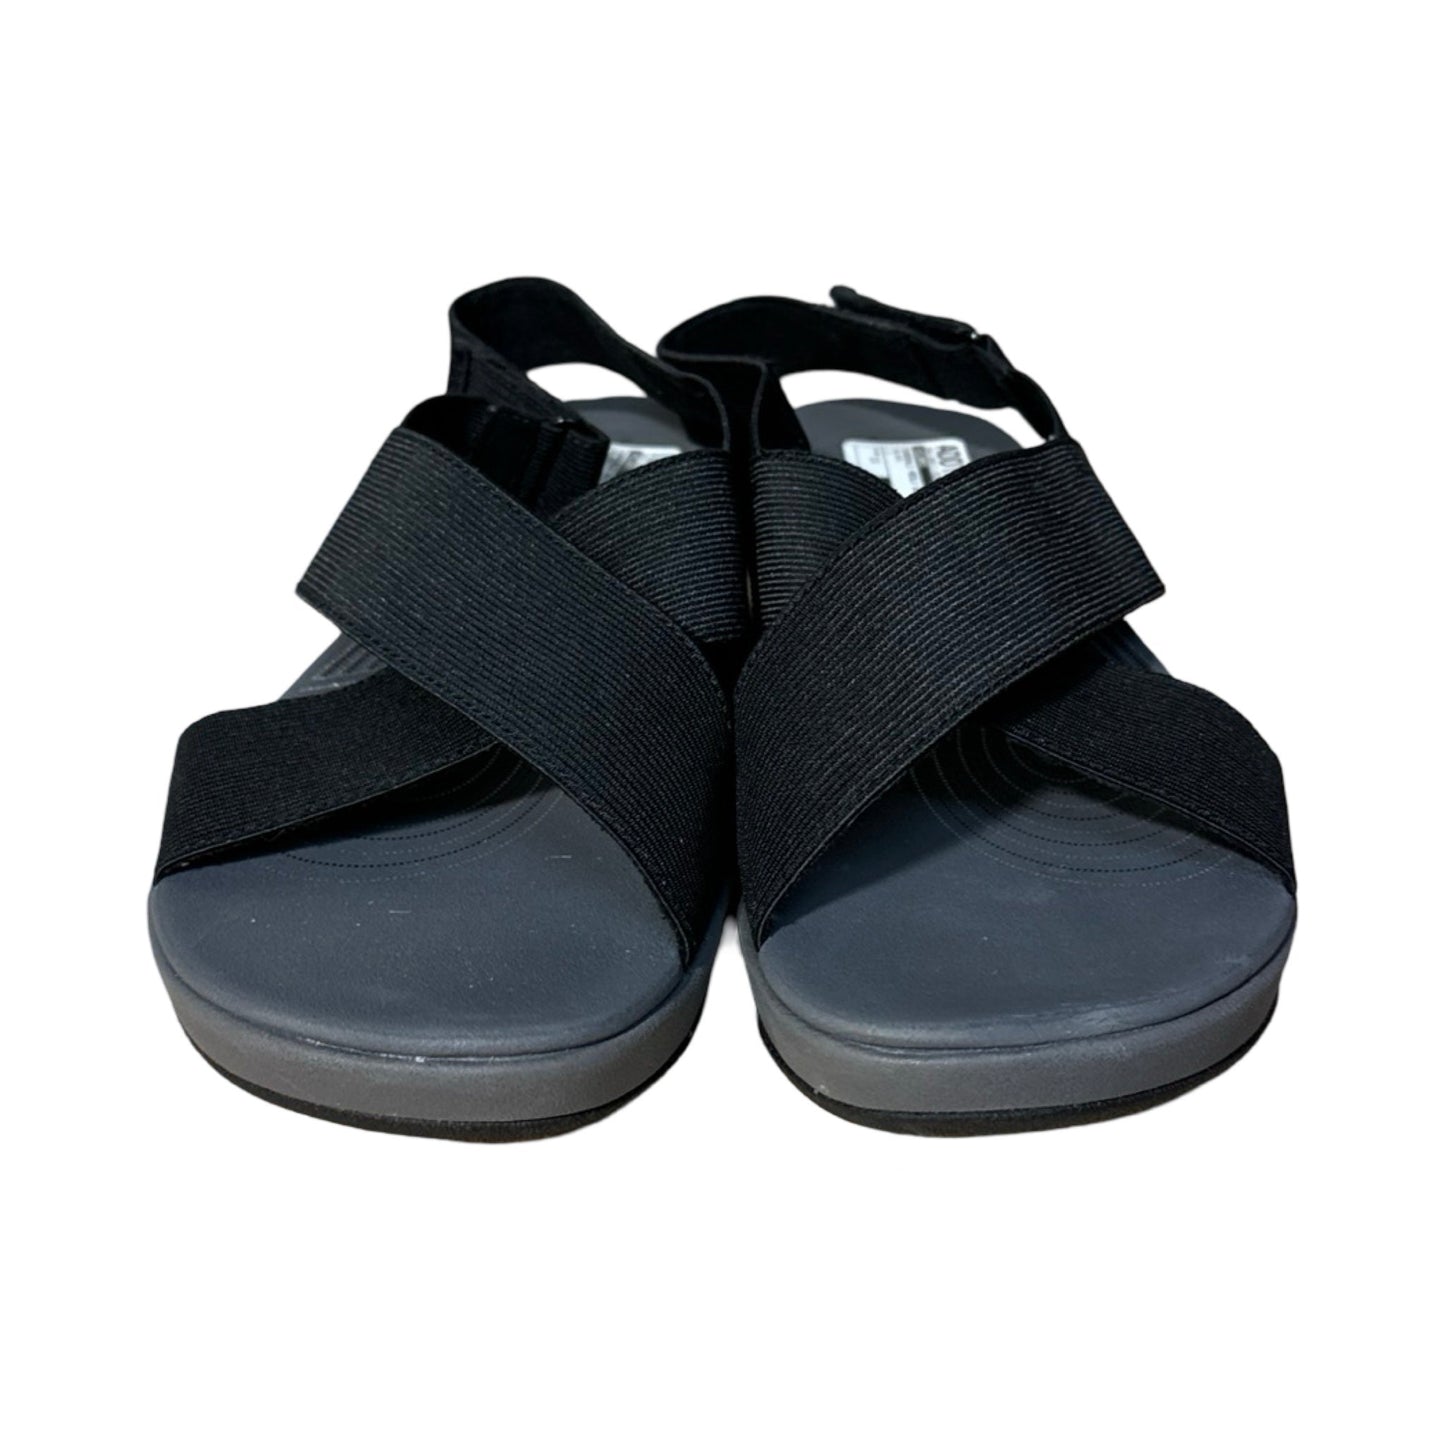 Black Sandals Heels Wedge Clarks, Size 11